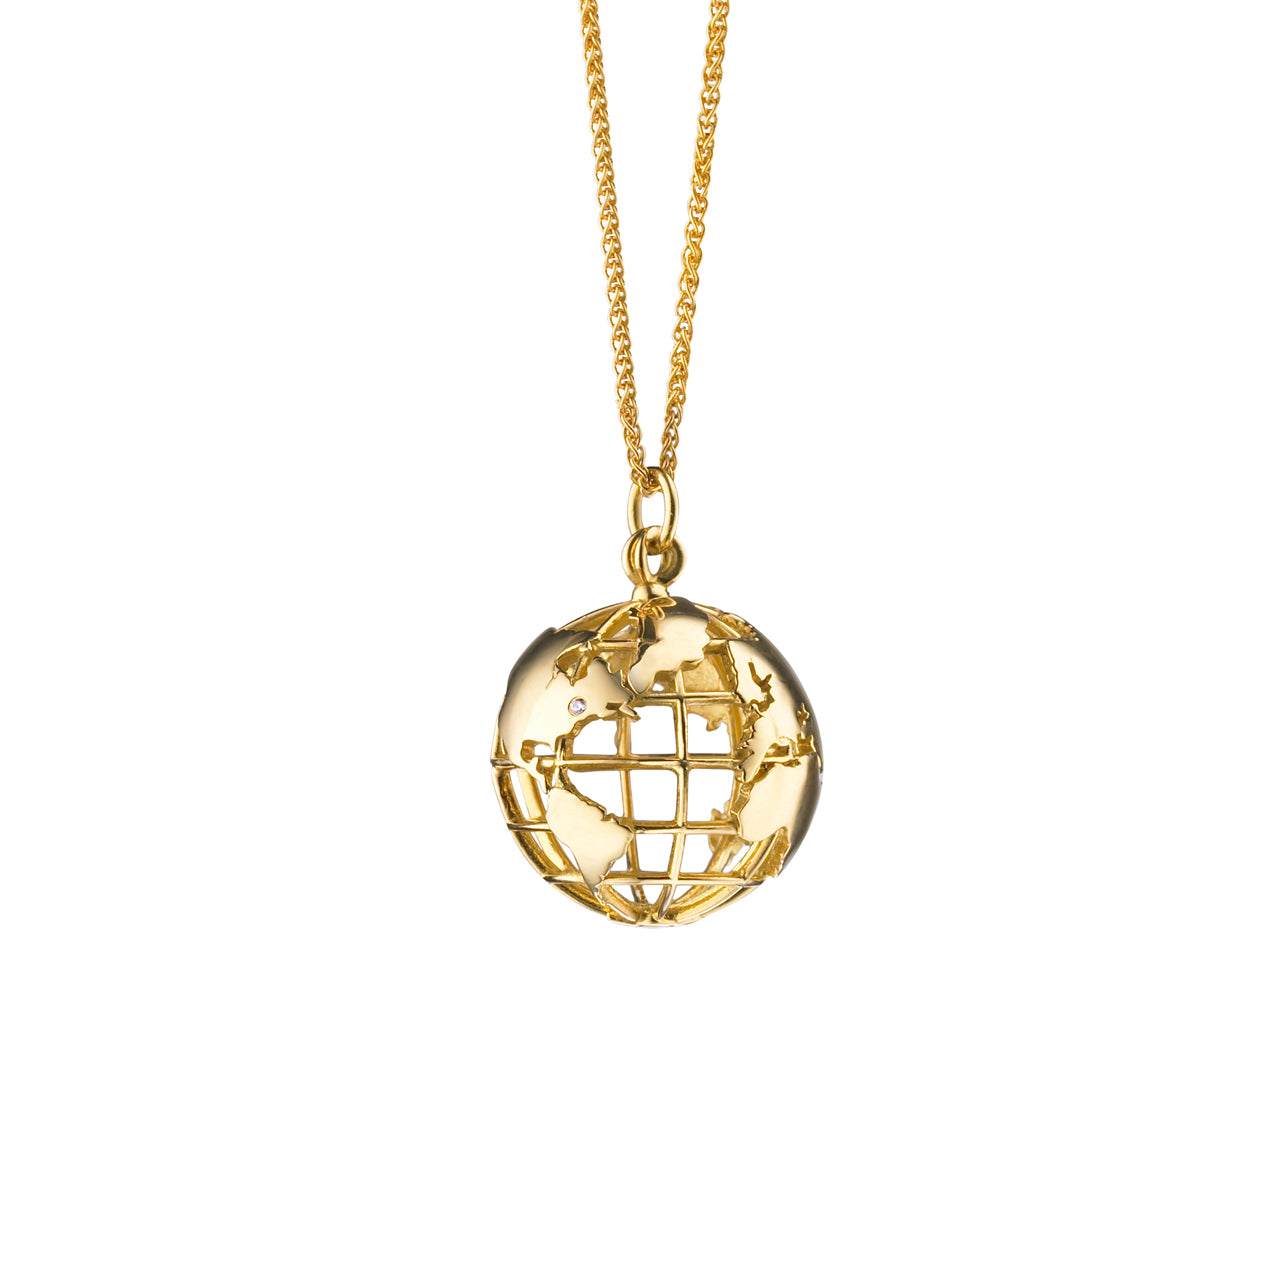 Petite 9ct Gold Globe Travel Charm Necklace | Posh Totty Designs